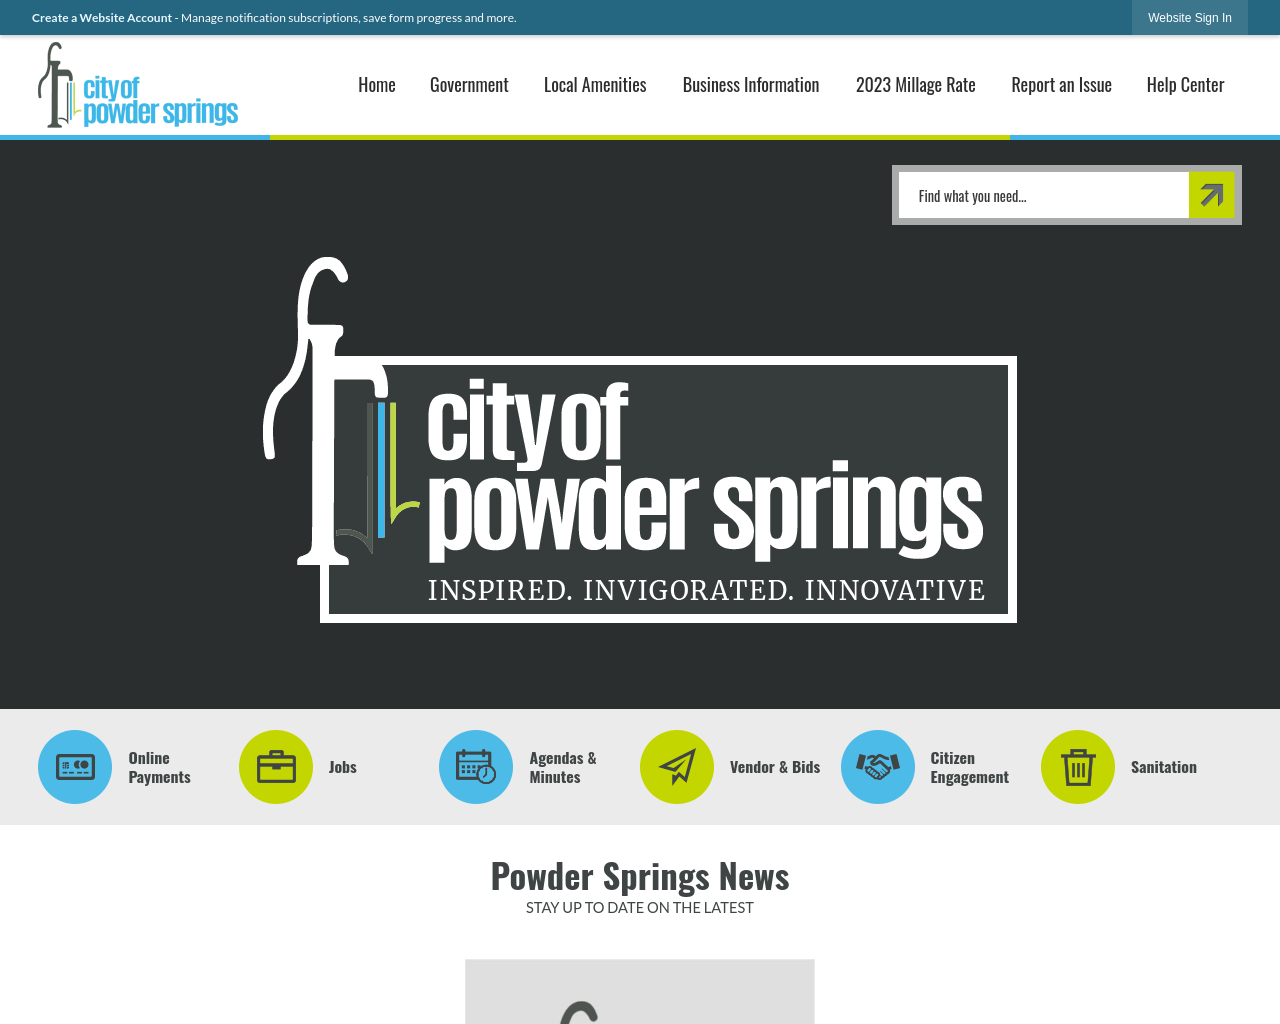 cityofpowdersprings.org